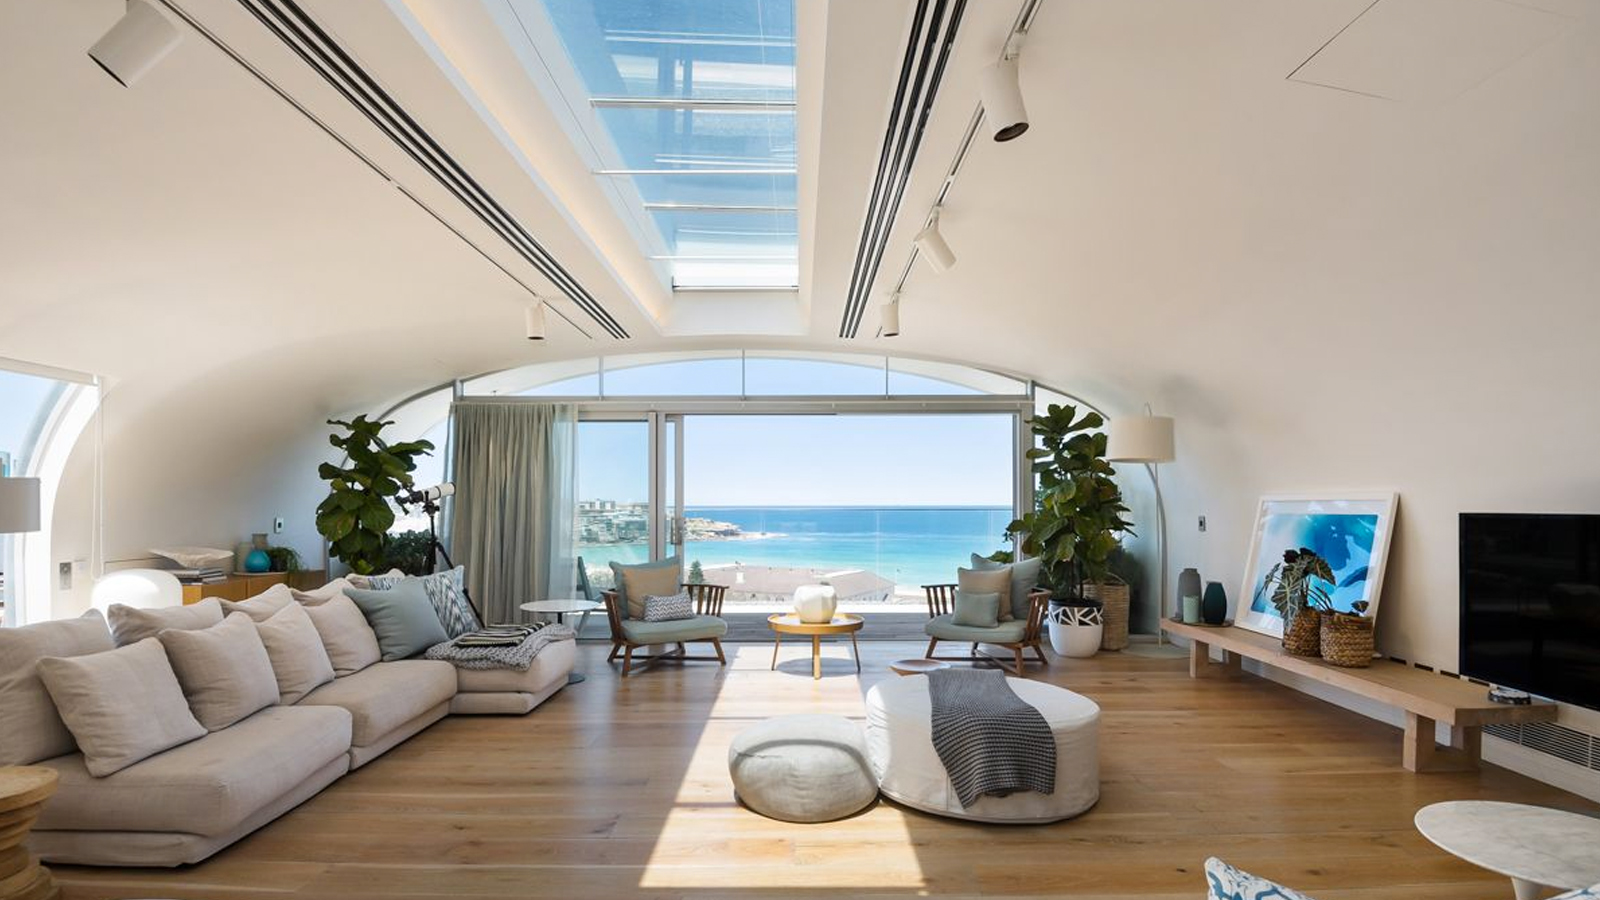 $13,500 A Week Bondi Beach Rental Is The Perfect ‘Kick On’ Pad